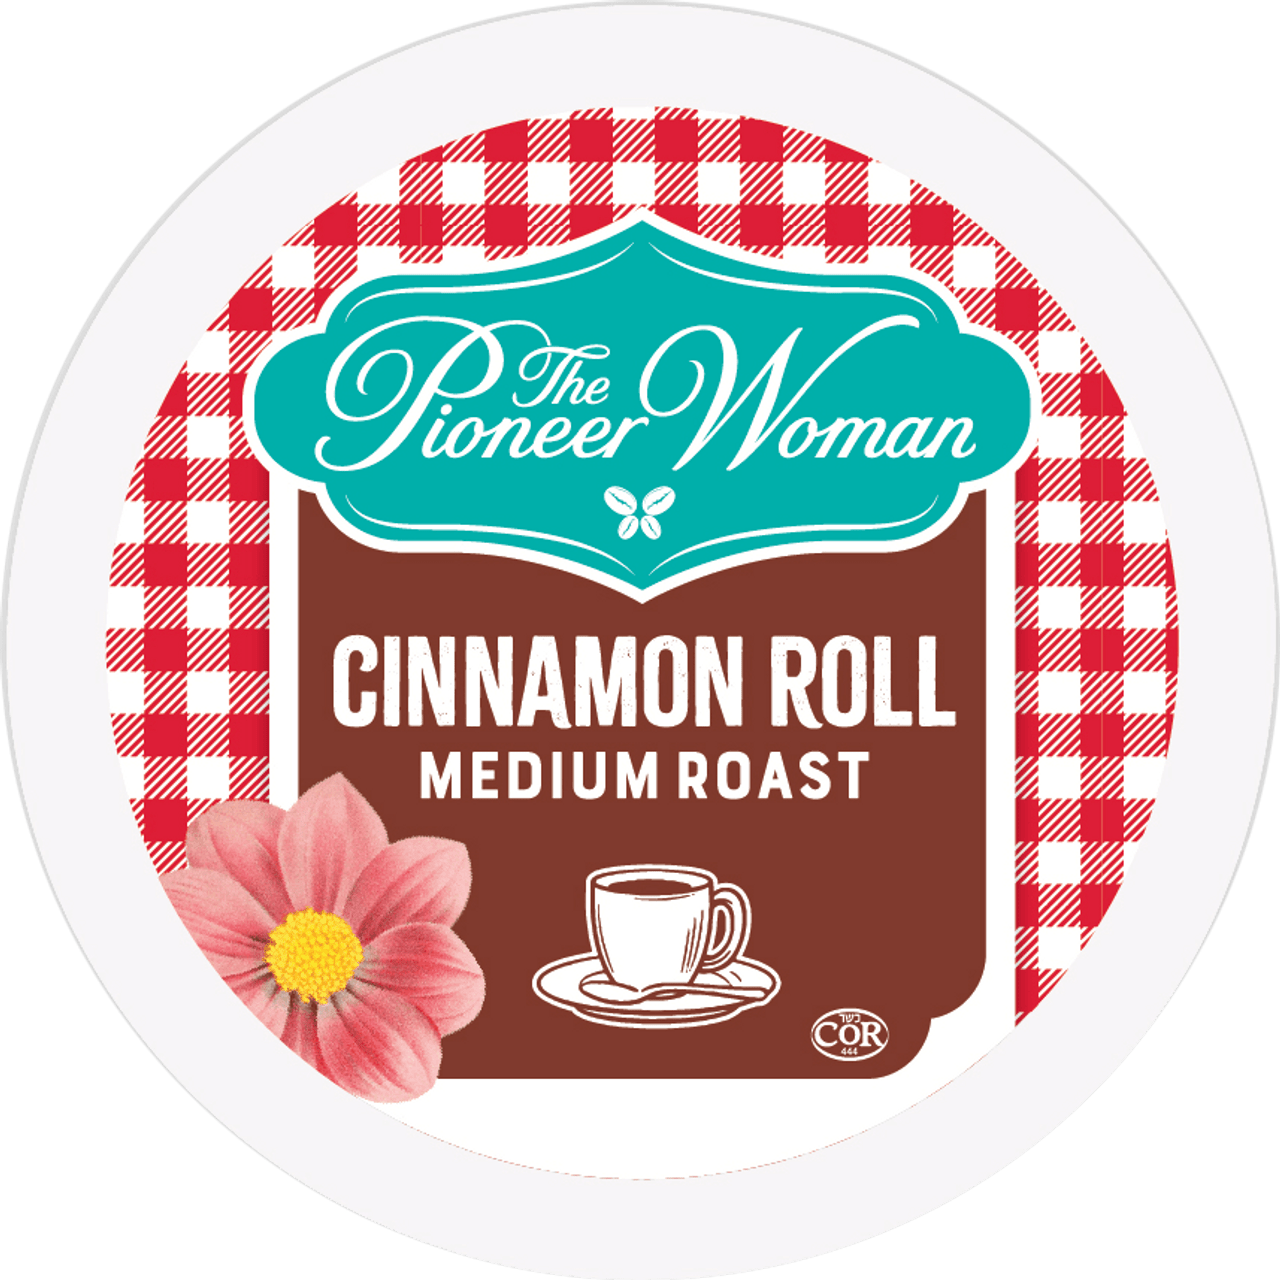 Cinnamoroll Coffee Mug Warmer Set